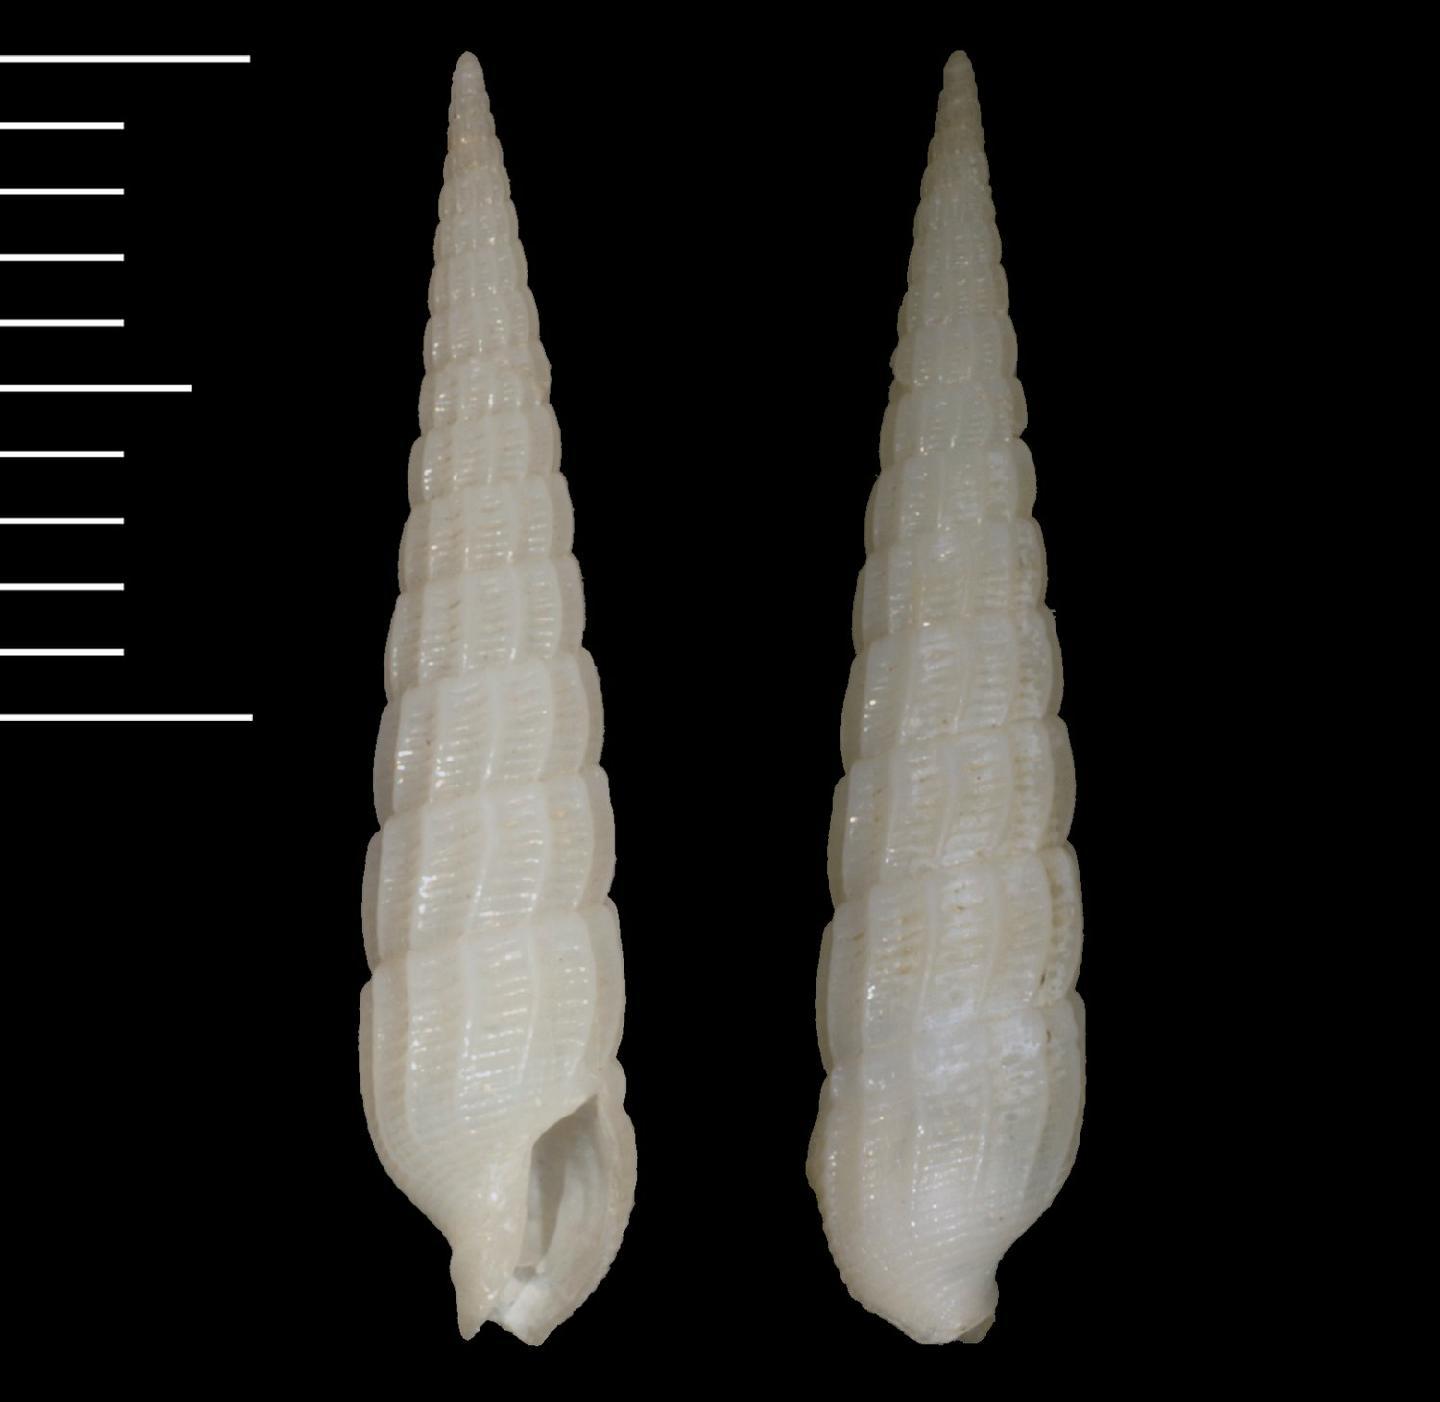 To NHMUK collection (Terebra (Myurella) fijiensis Smith, 1873; LECTOTYPE; NHMUK:ecatalogue:5755965)